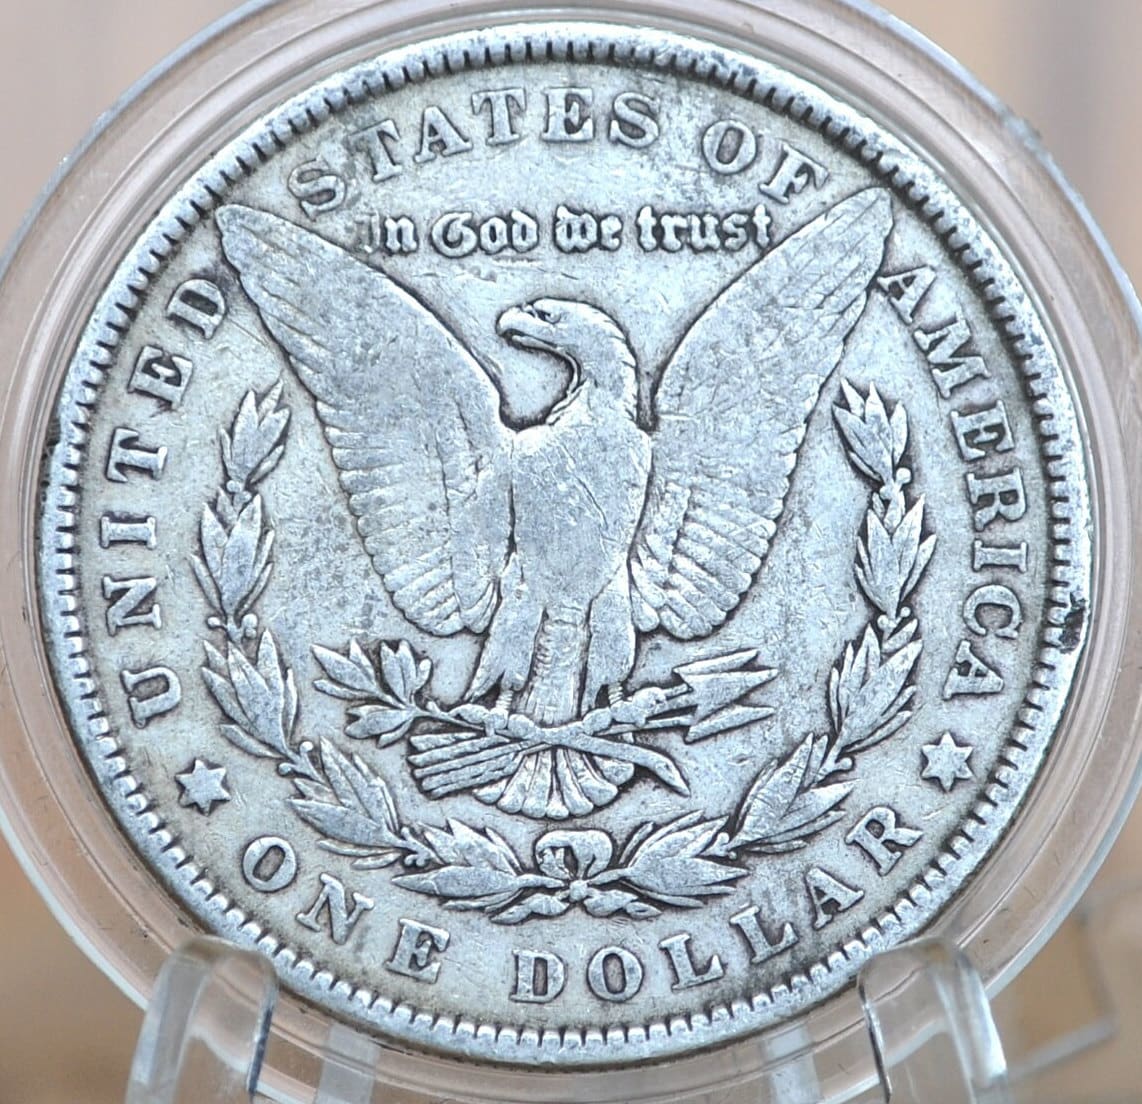 1901 Morgan Silver Dollar - VF (Very Fine) - Philadelphia Mint - 1901 P Morgan Silver - 1901 P Morgan Dollar - Great Date